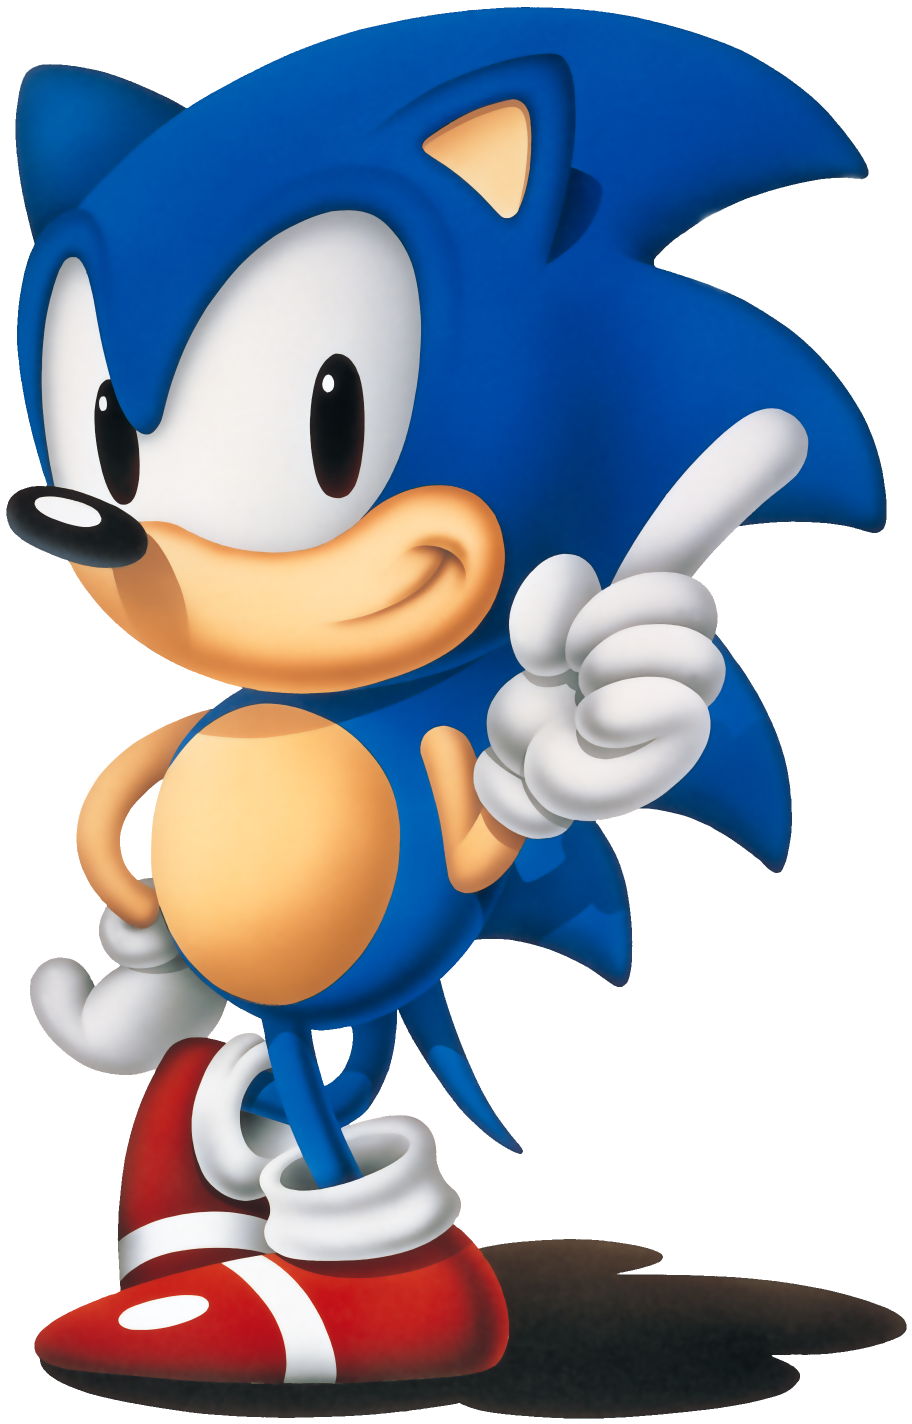 Sonic the Hedgehog | Sonic Wiki | FANDOM powered by Wikia